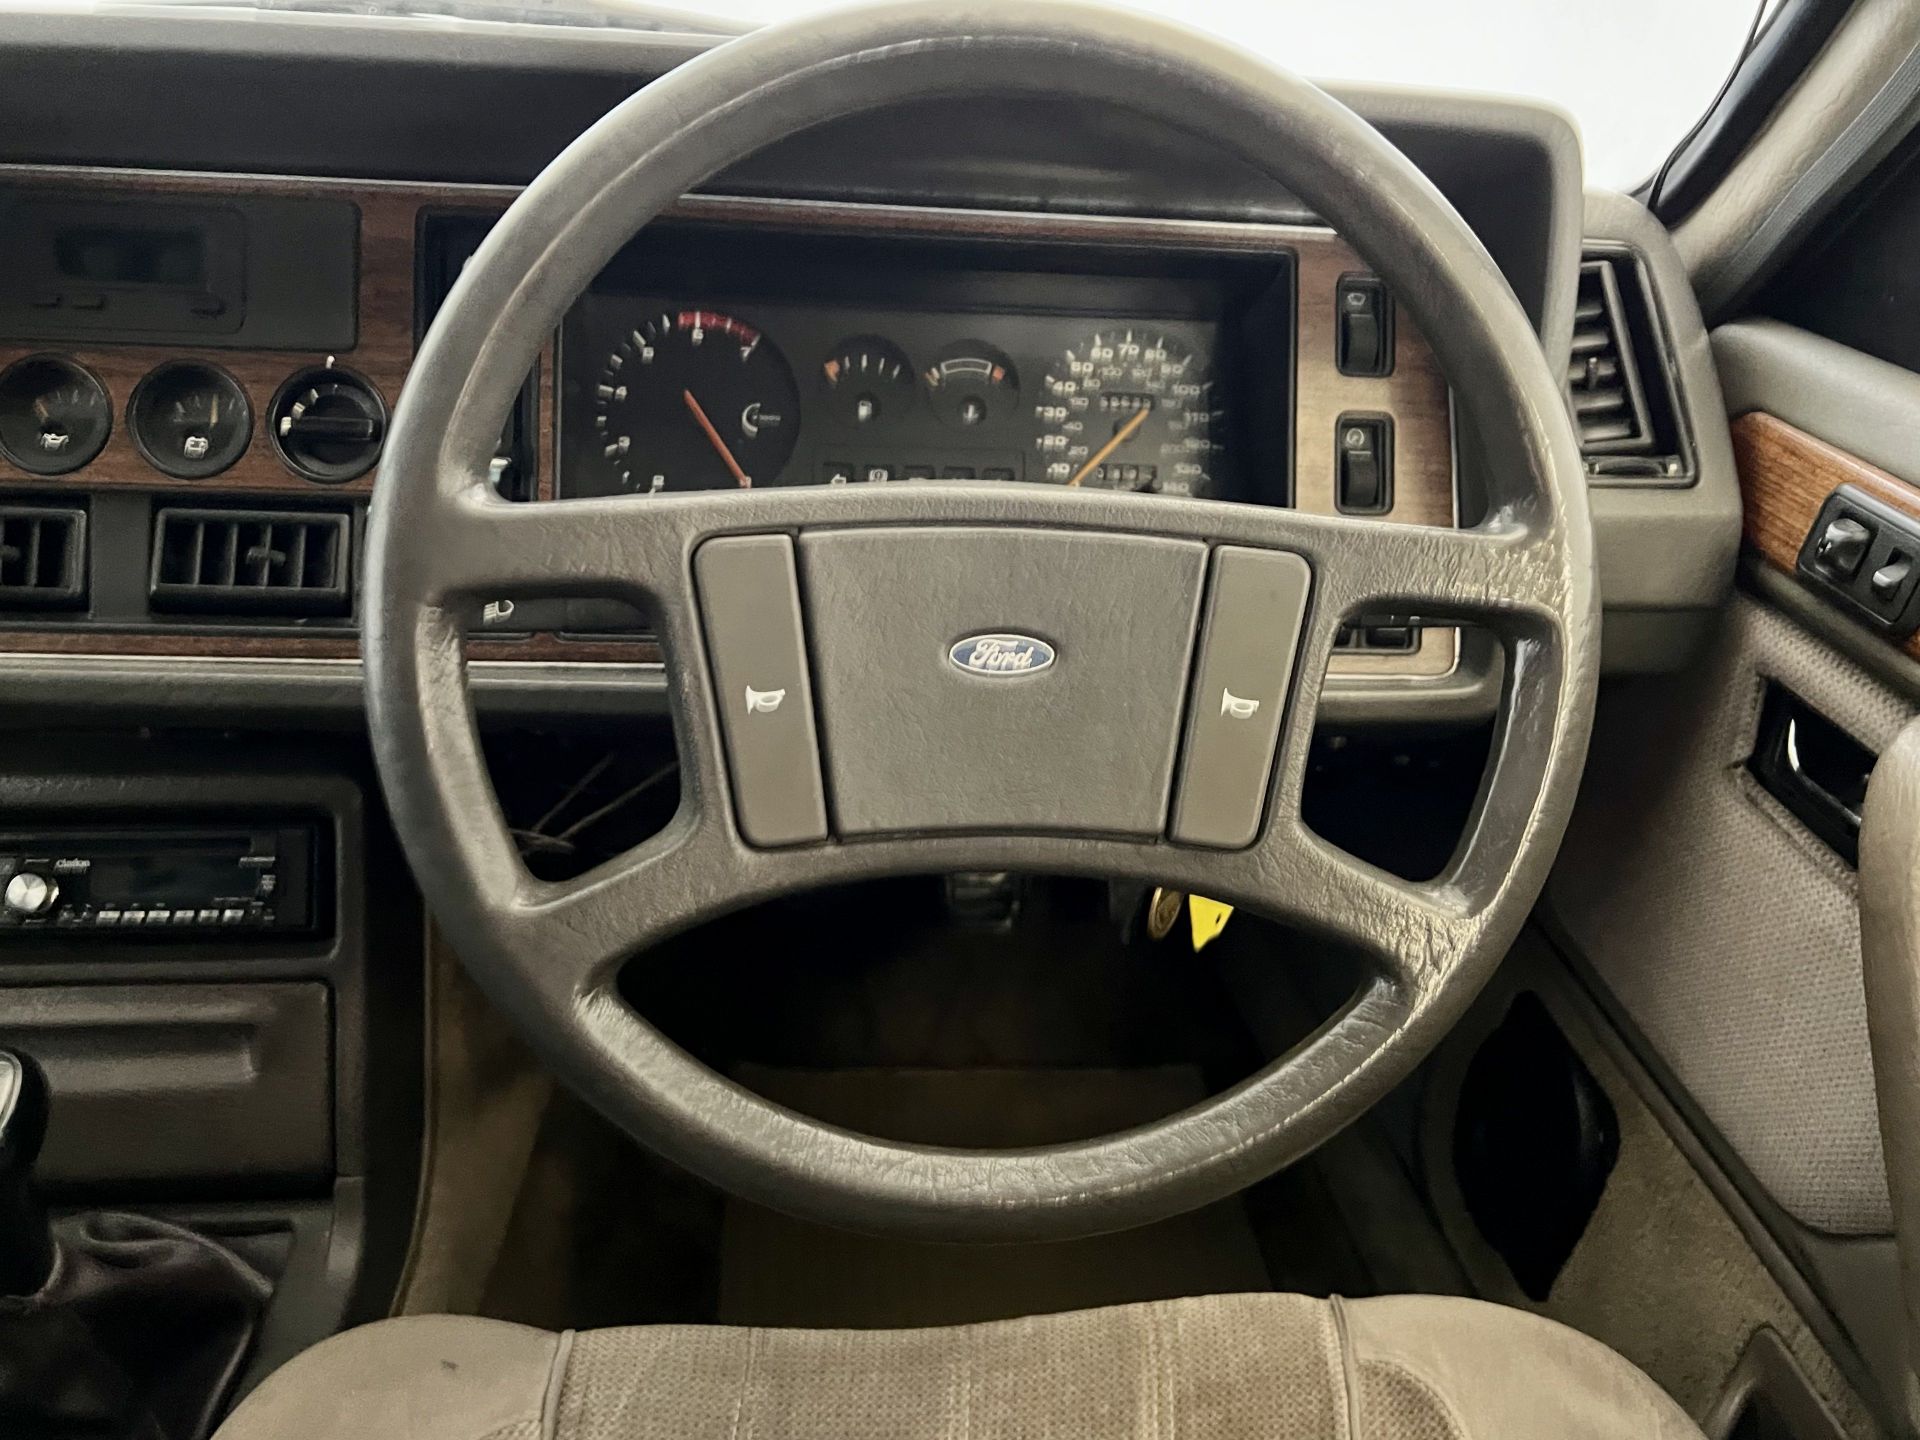 Ford Granada - Image 31 of 36